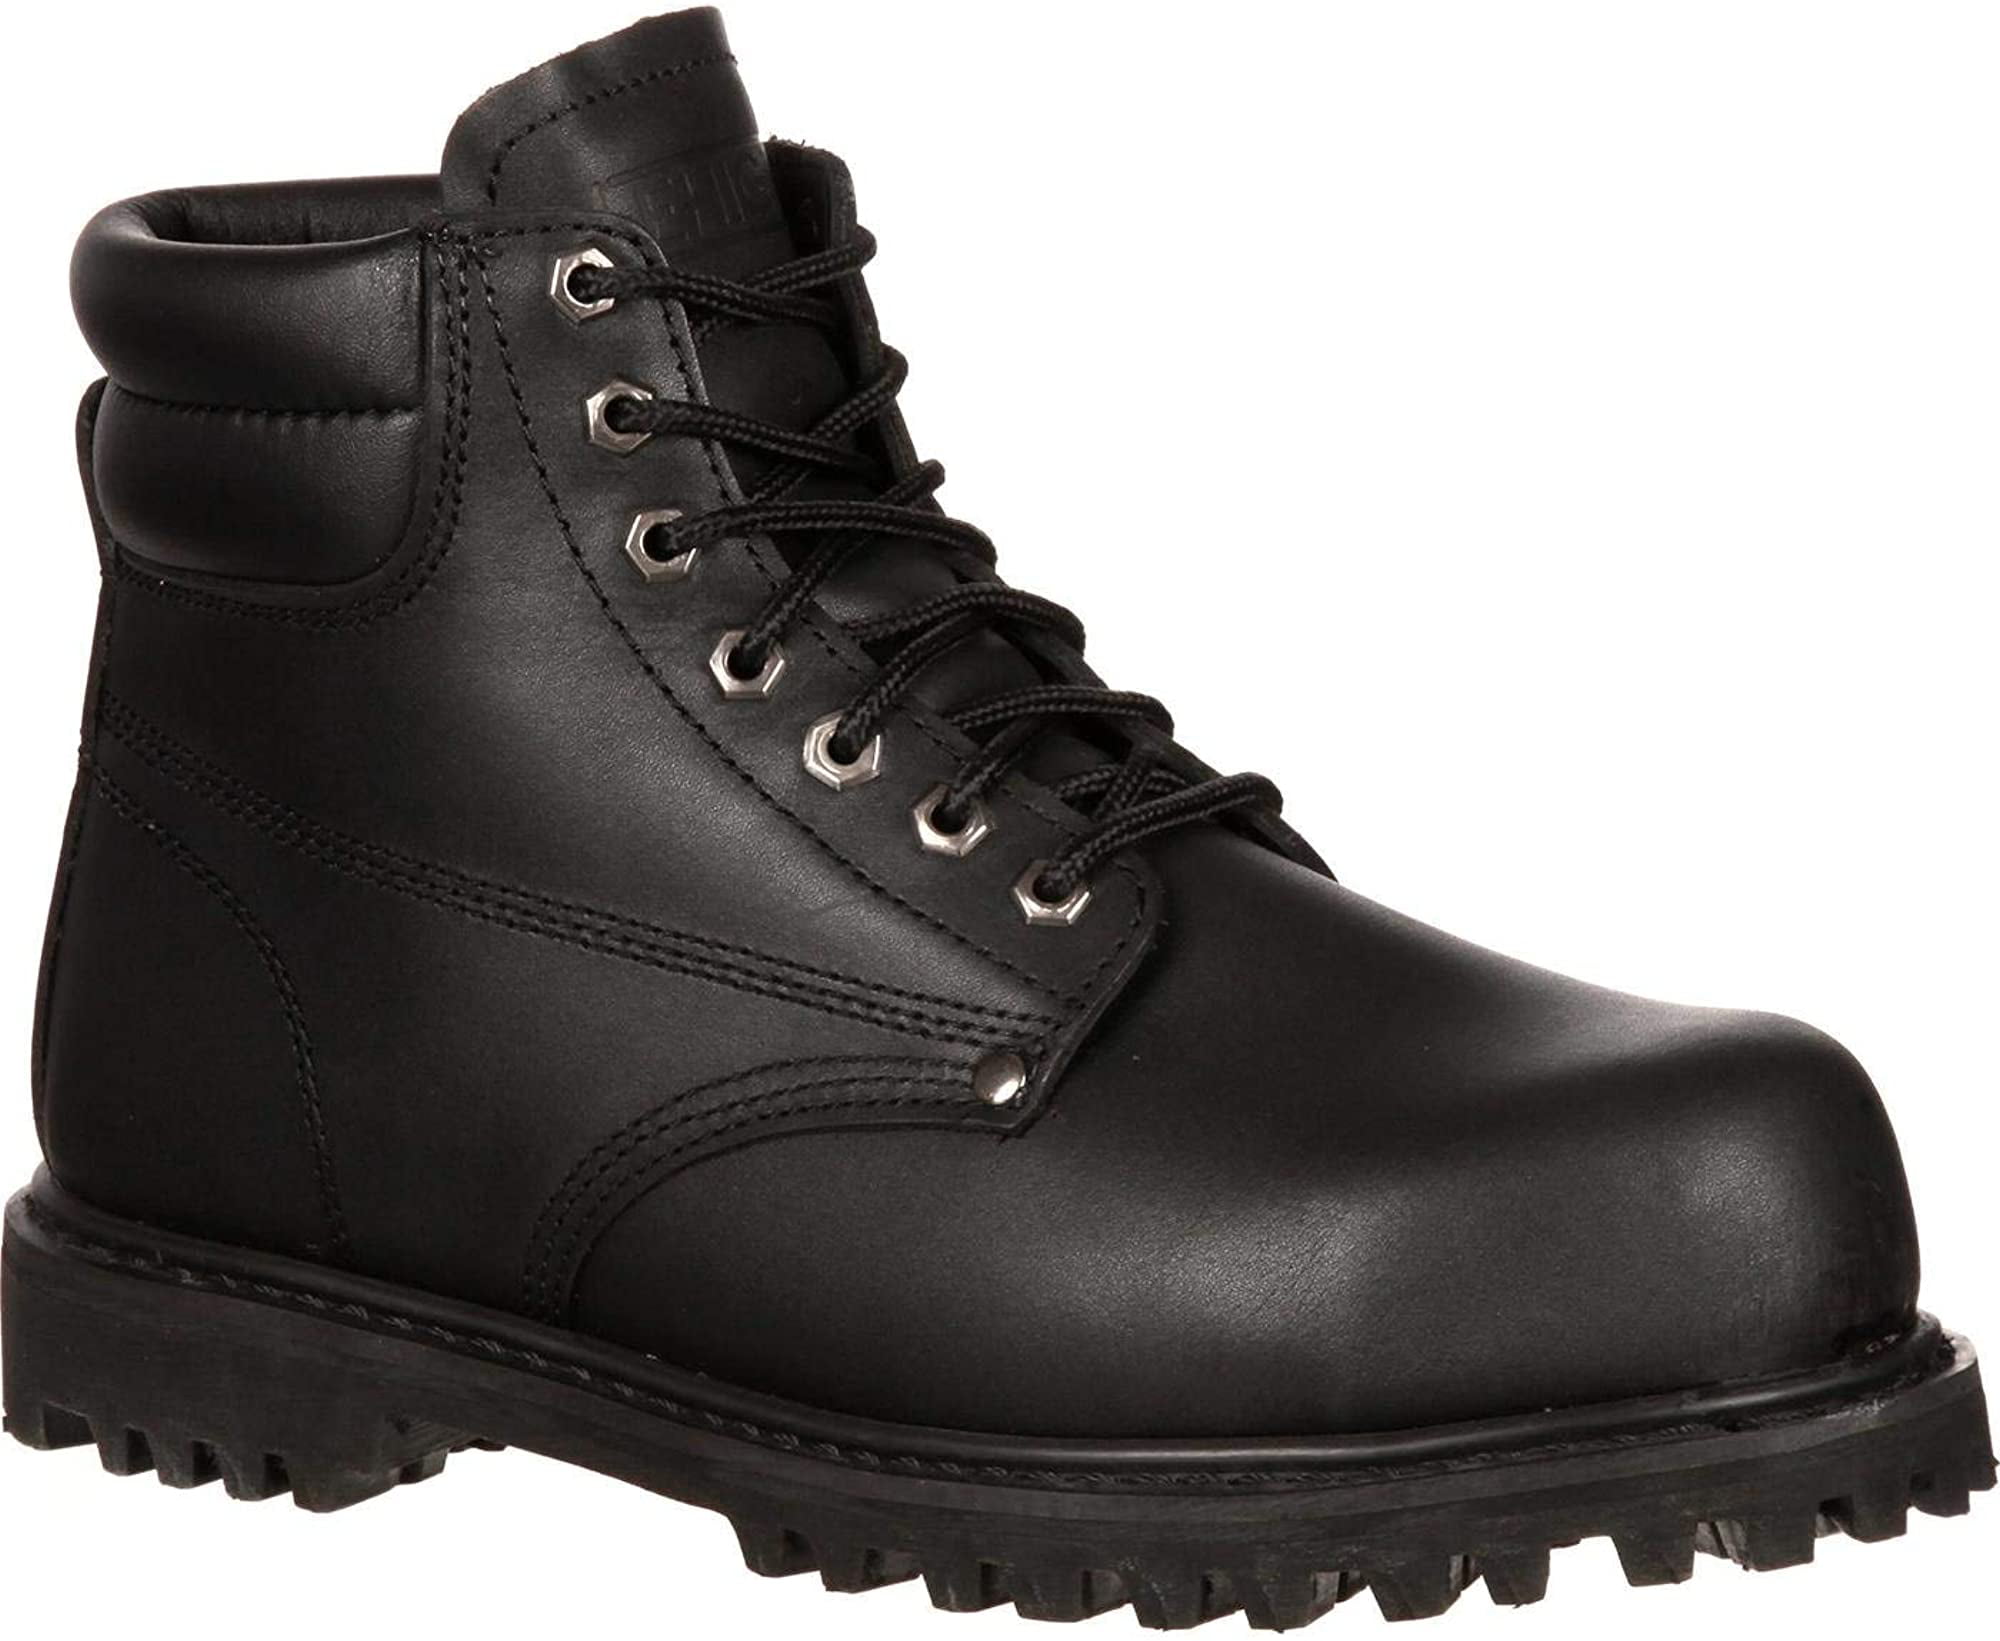 Lehigh Safety Shoes Unisex Steel Toe Work Boot | Walmart Canada